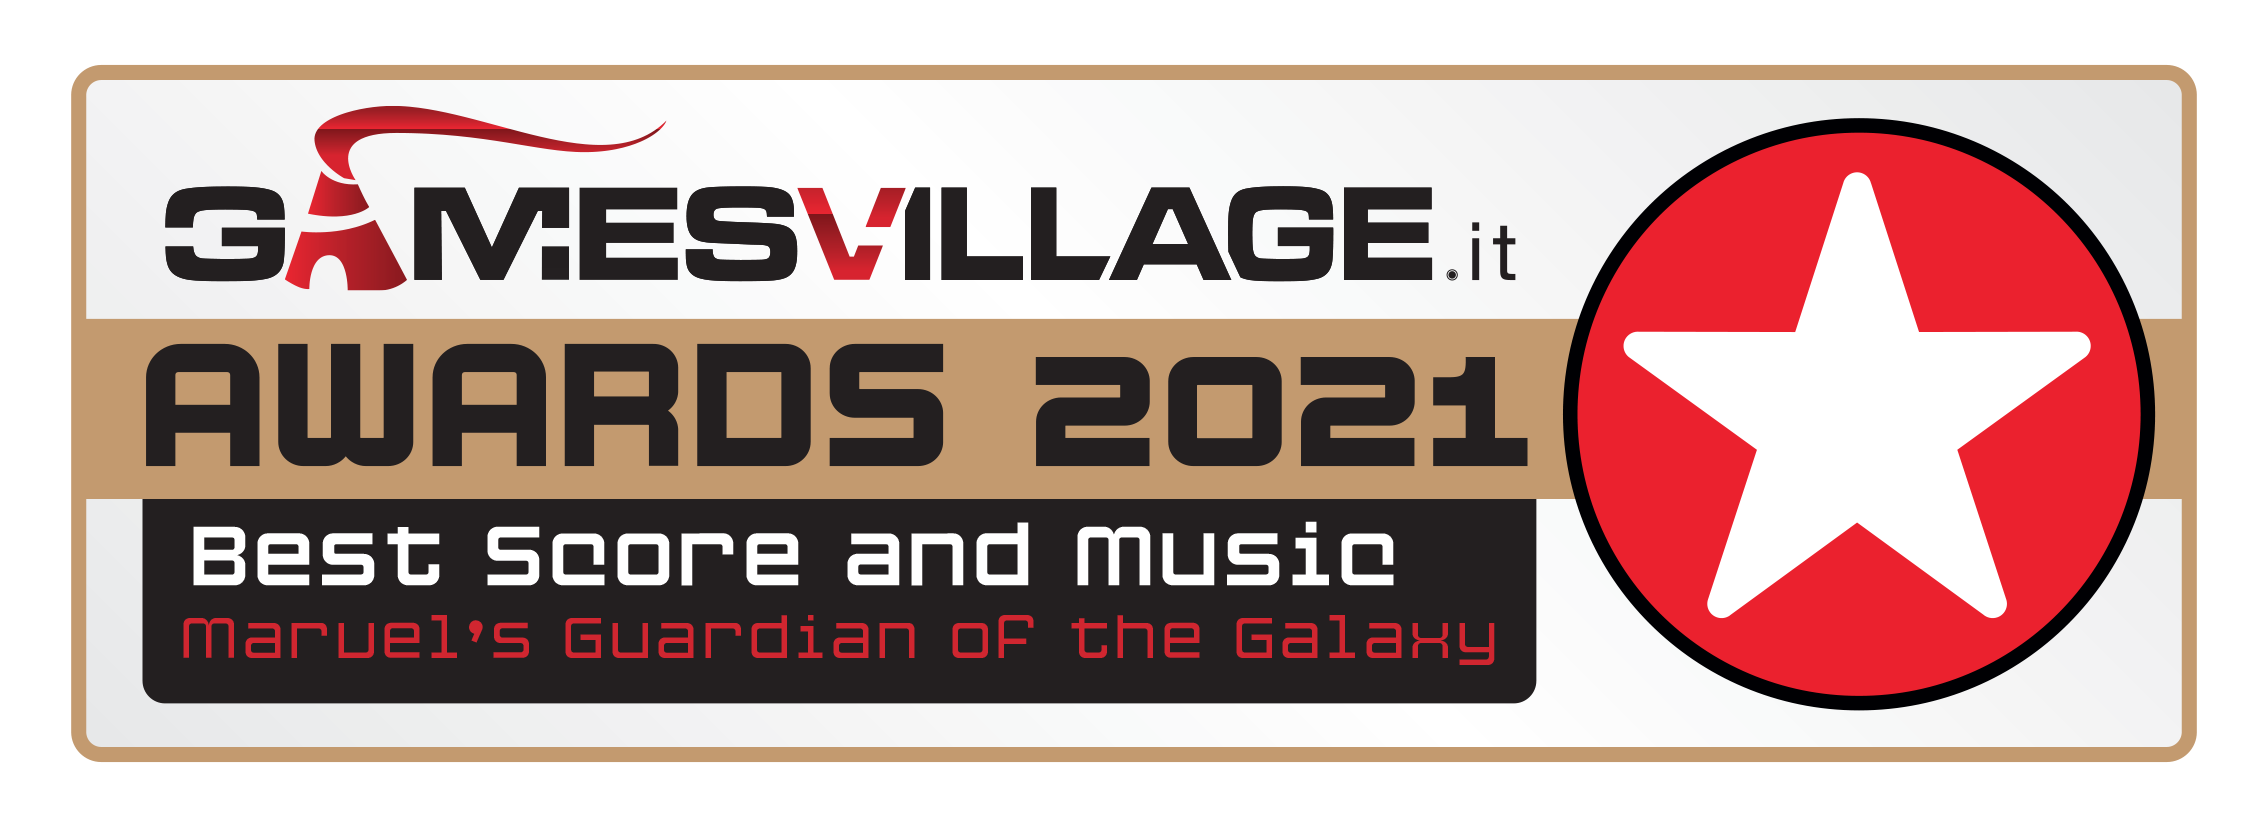 GamesVillage Awards 2021